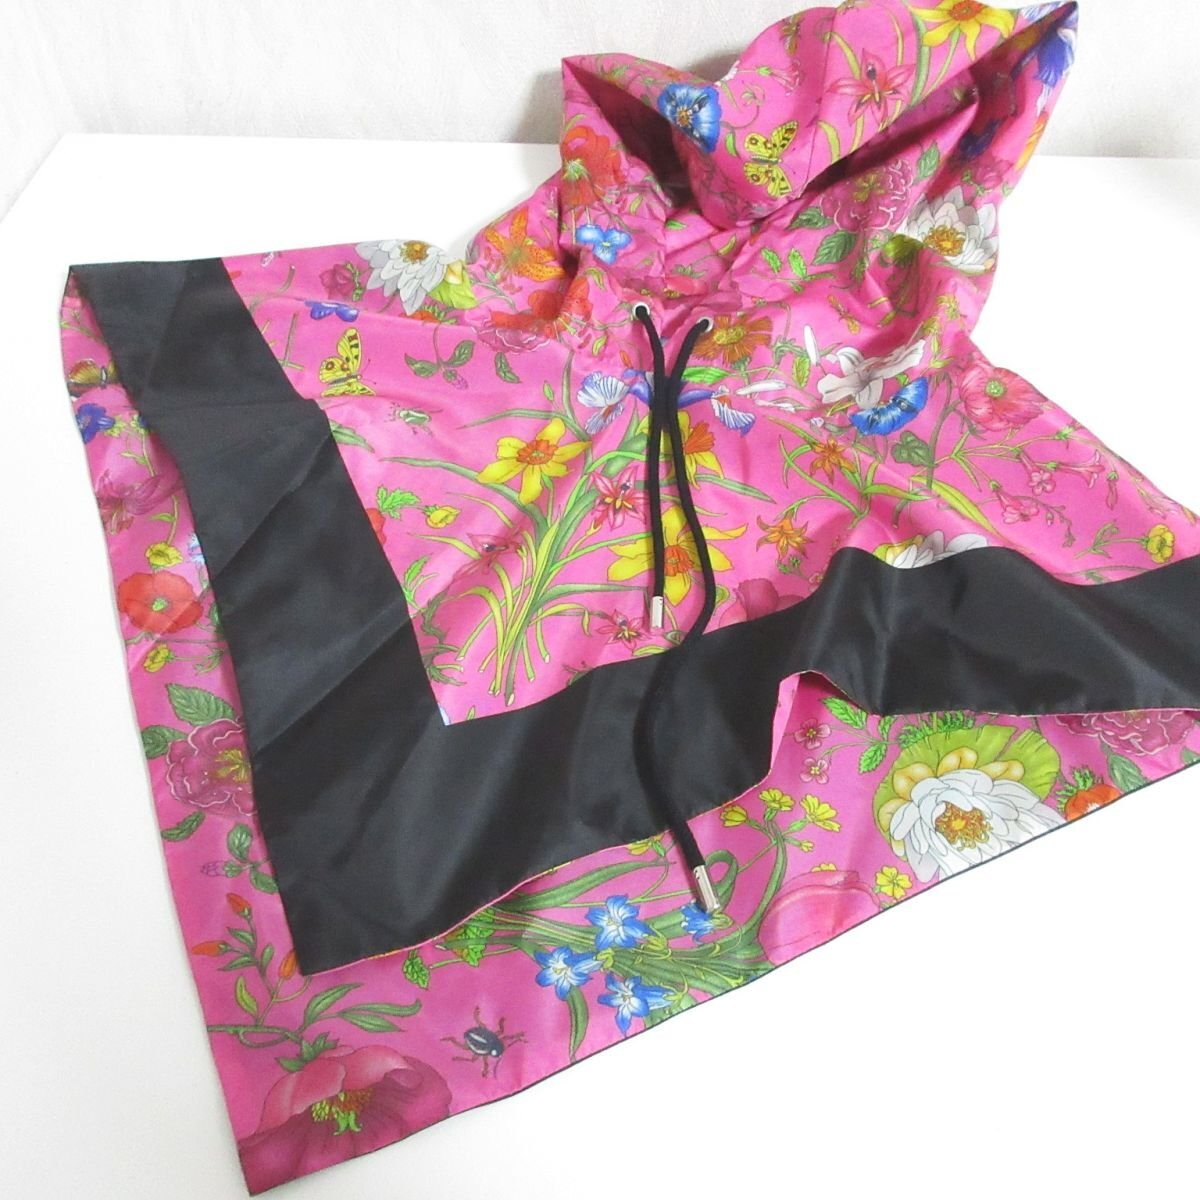  as good as new 20SS GUCCI Gucci nylon flora flower print rain hood poncho M pink series *